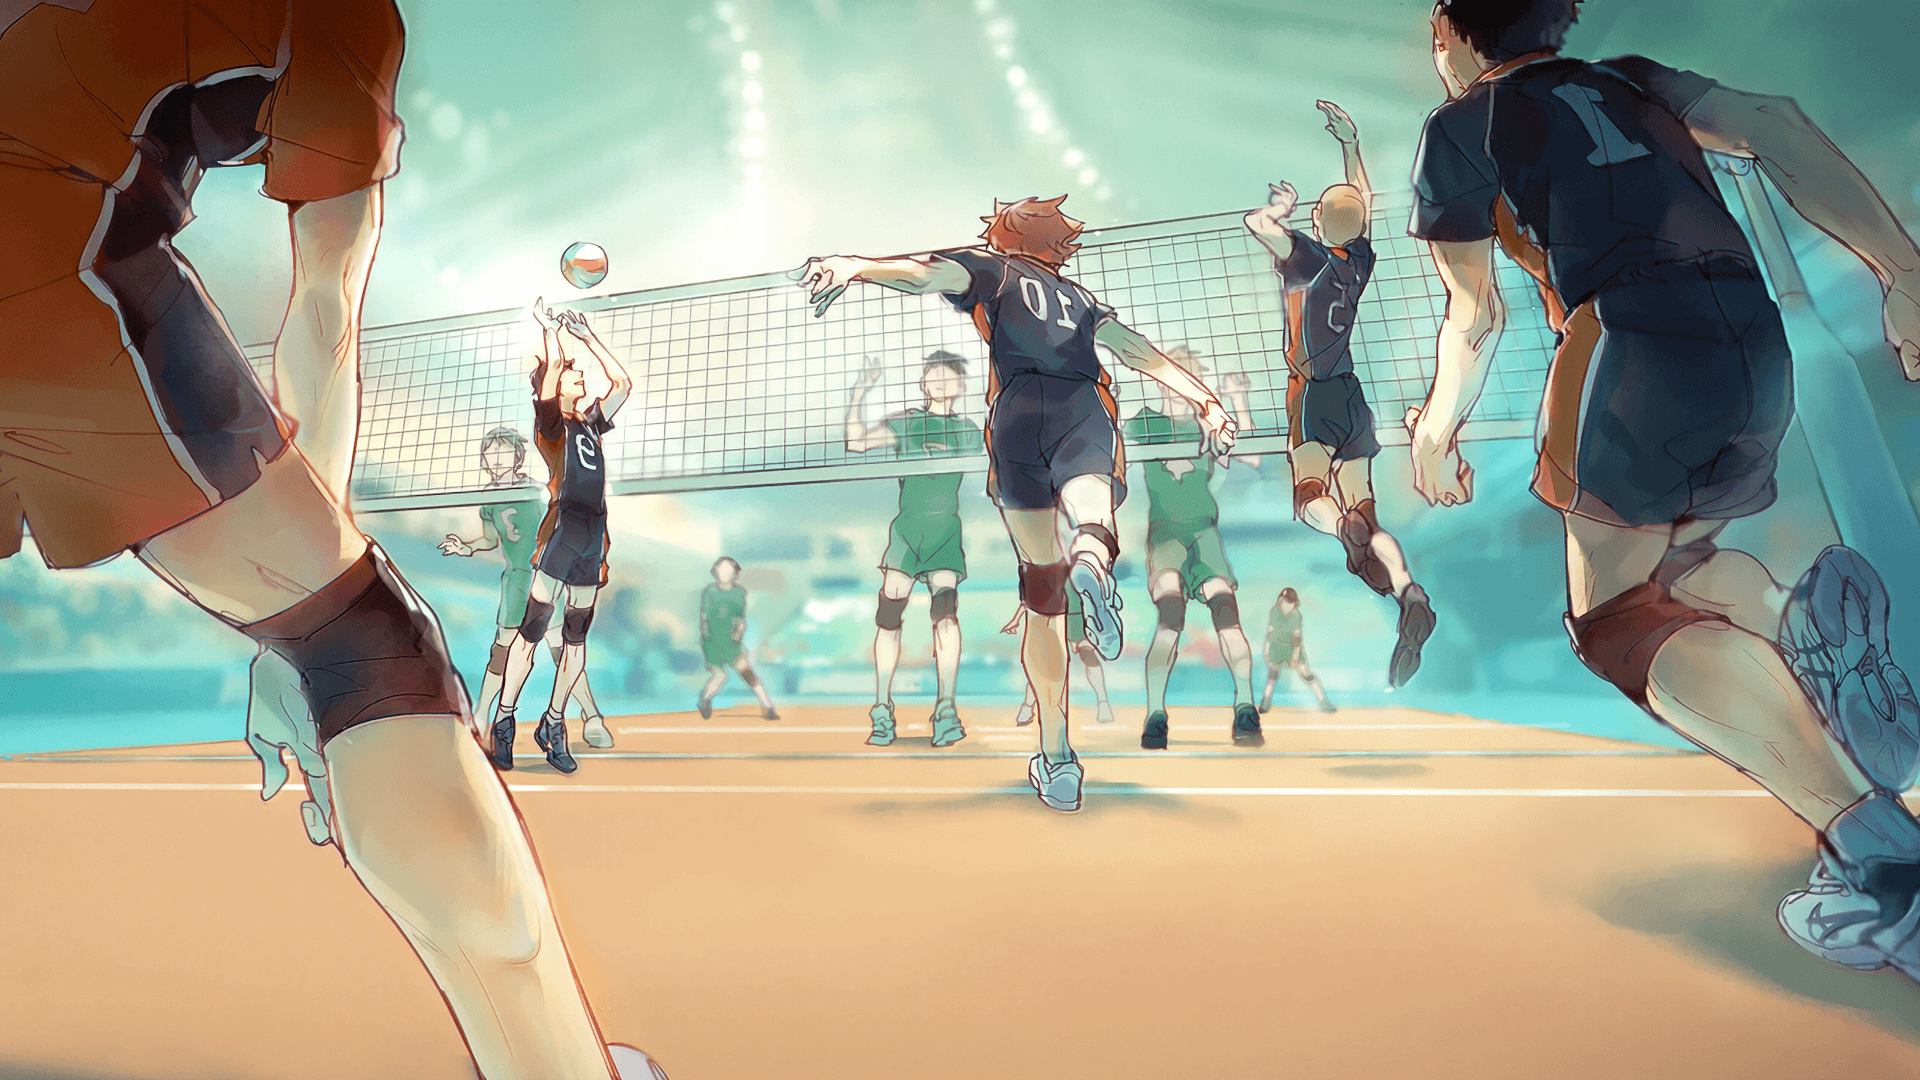 Poster World Hinata Shouyo Haikyuu Volleyball Anime Matte Finish Paper  Print Poster 12 x 18 inch (Multicolor) PW-8747 : Amazon.in: Home & Kitchen